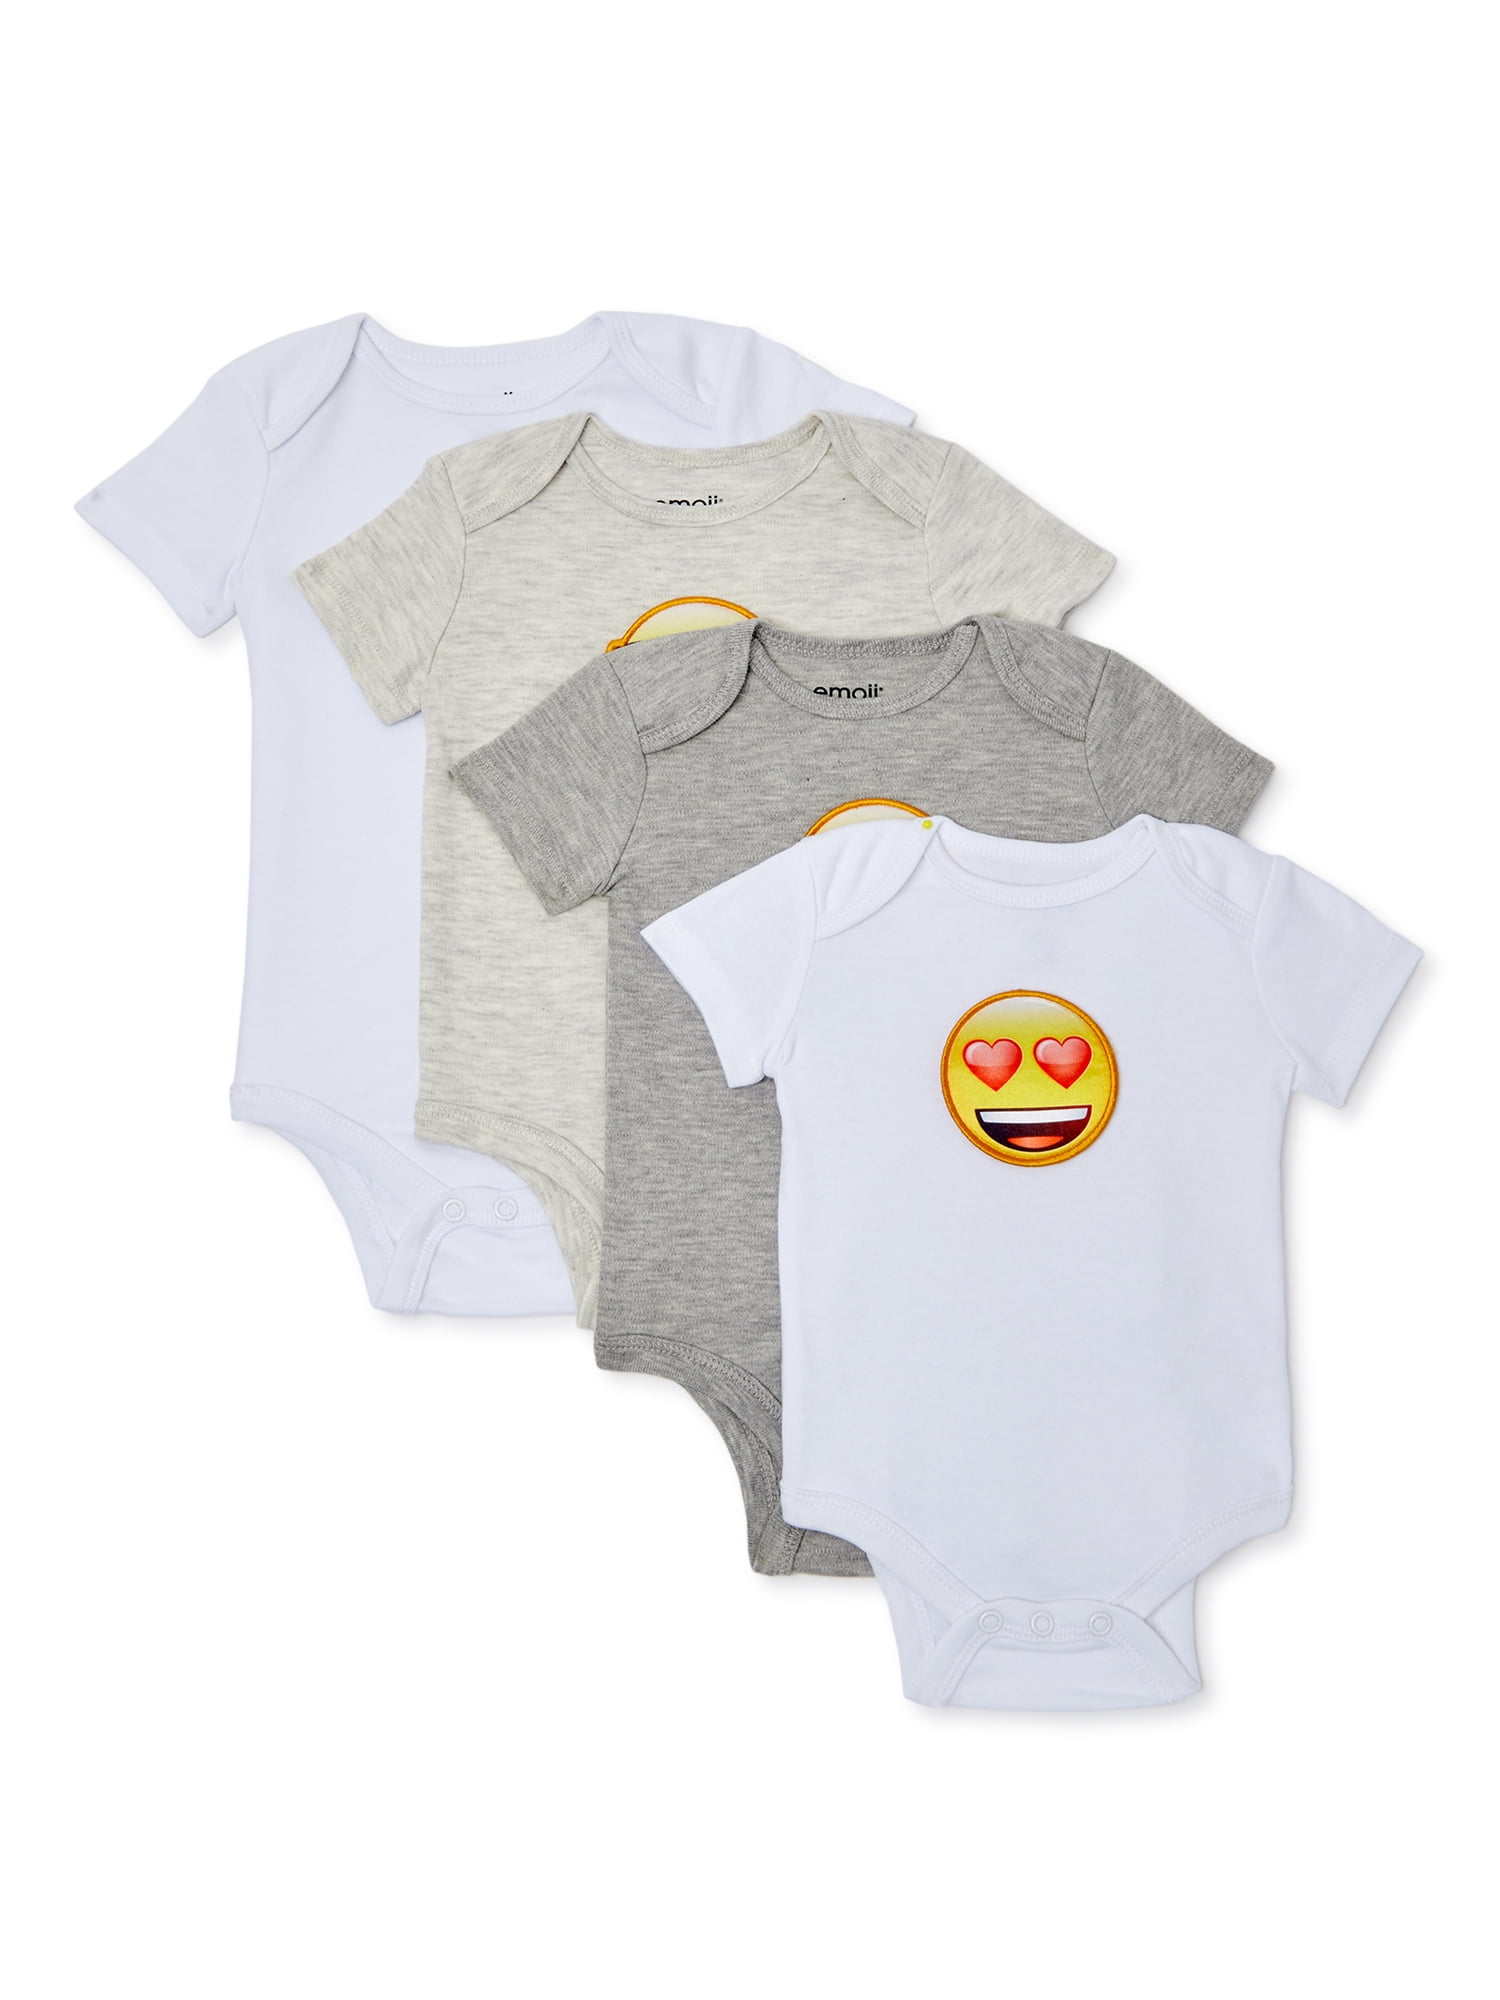 American Apparel Infant Baby Rib Lap T-Shirt sz 3-6 Months Heather Gray NEW $8